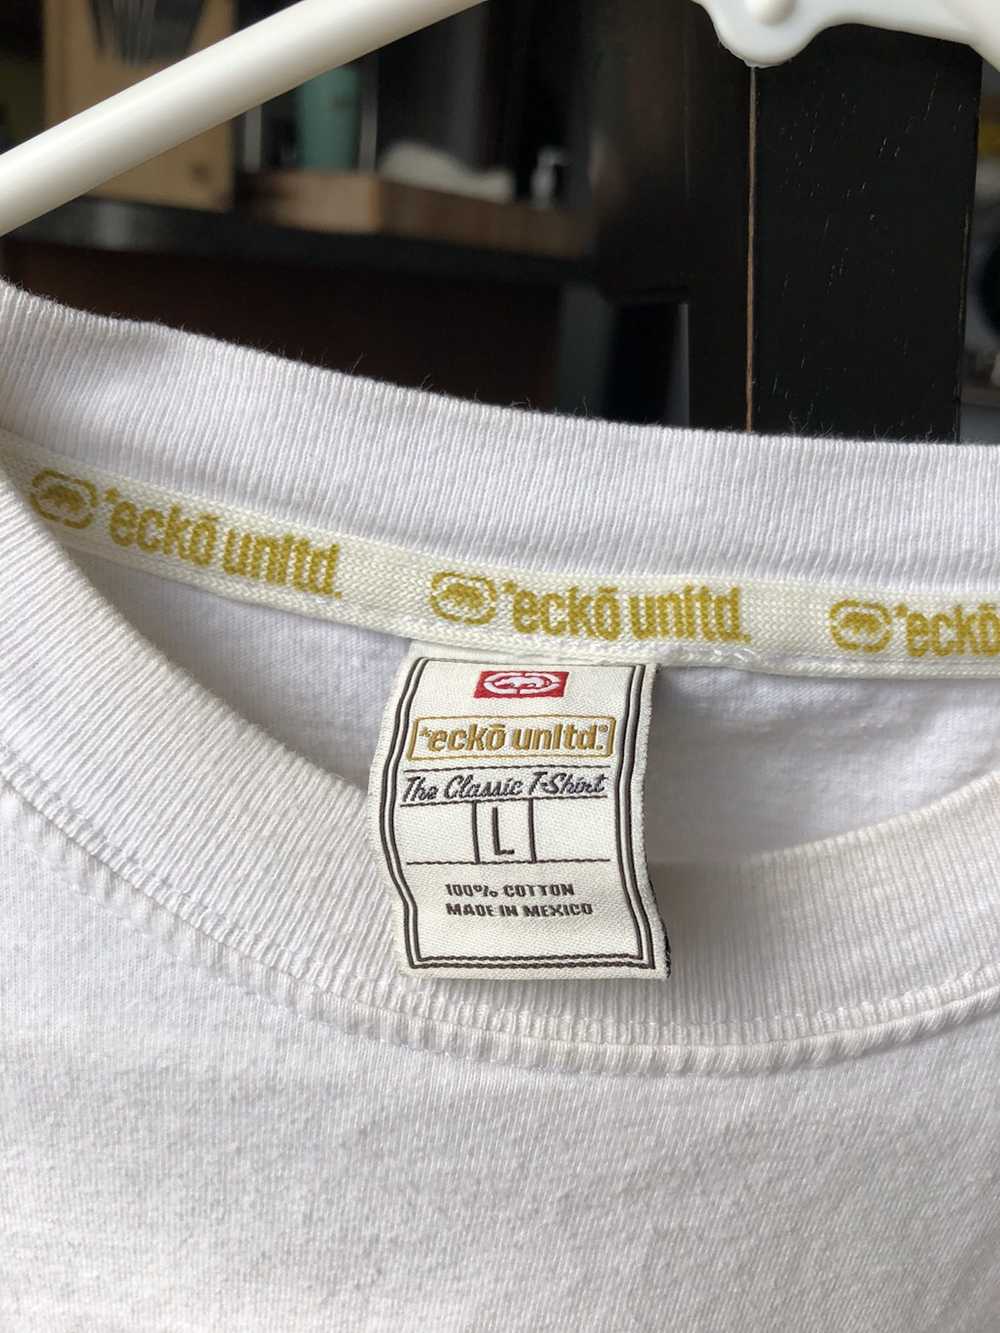 Ecko Unltd. Sneakers ruined my life shirt. White … - image 10